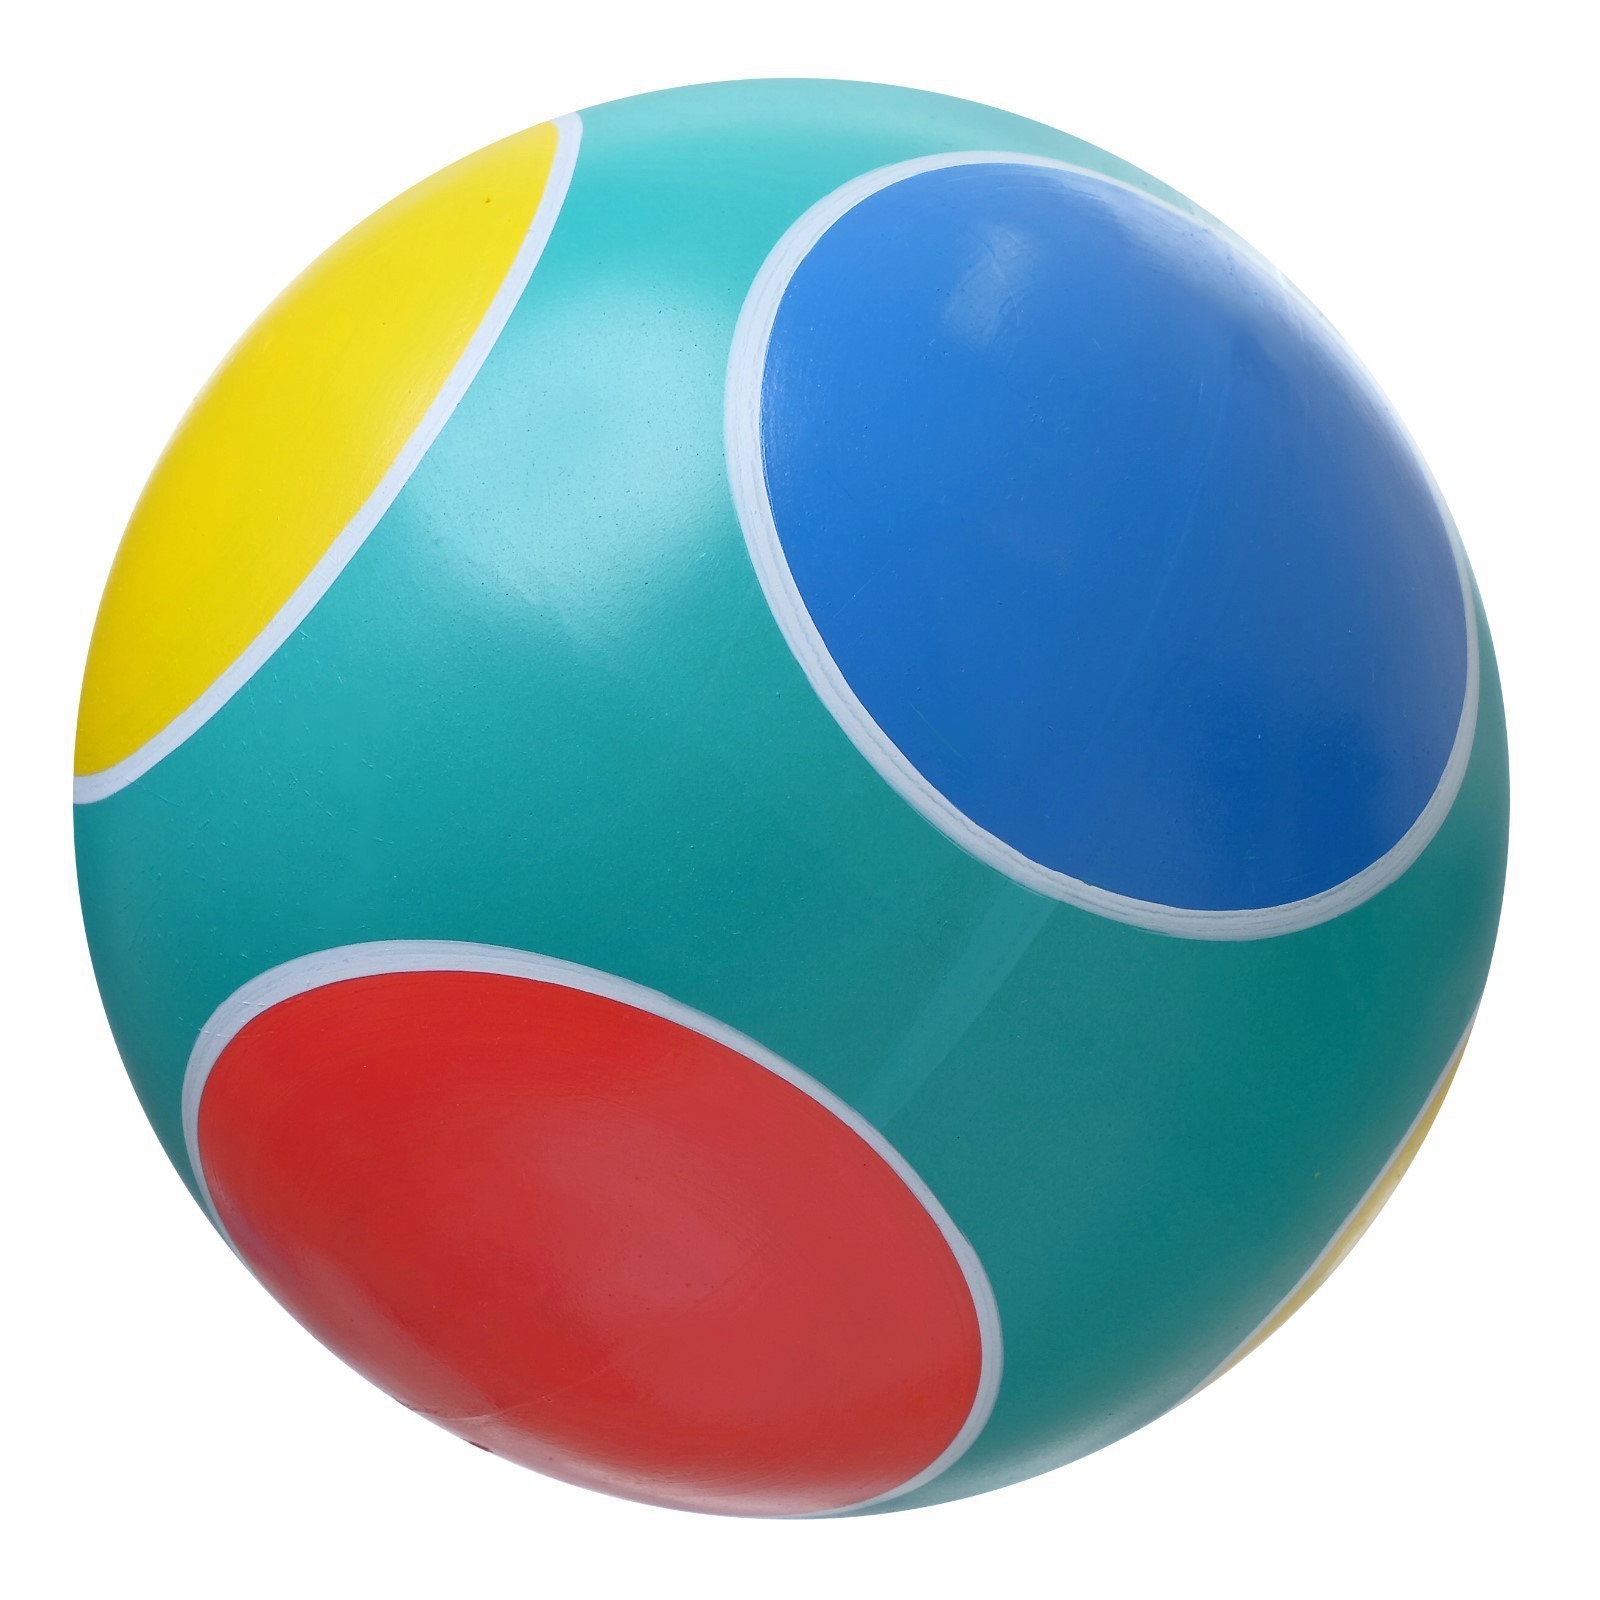 Мяч для ребенка 5 лет. Мяч 125мм классика 3-125. Мяч диаметр 12.5. Мяч резиновый 125мм р3-125 кл. Мяч Сатурн диаметр 12.5 см цвета микс.